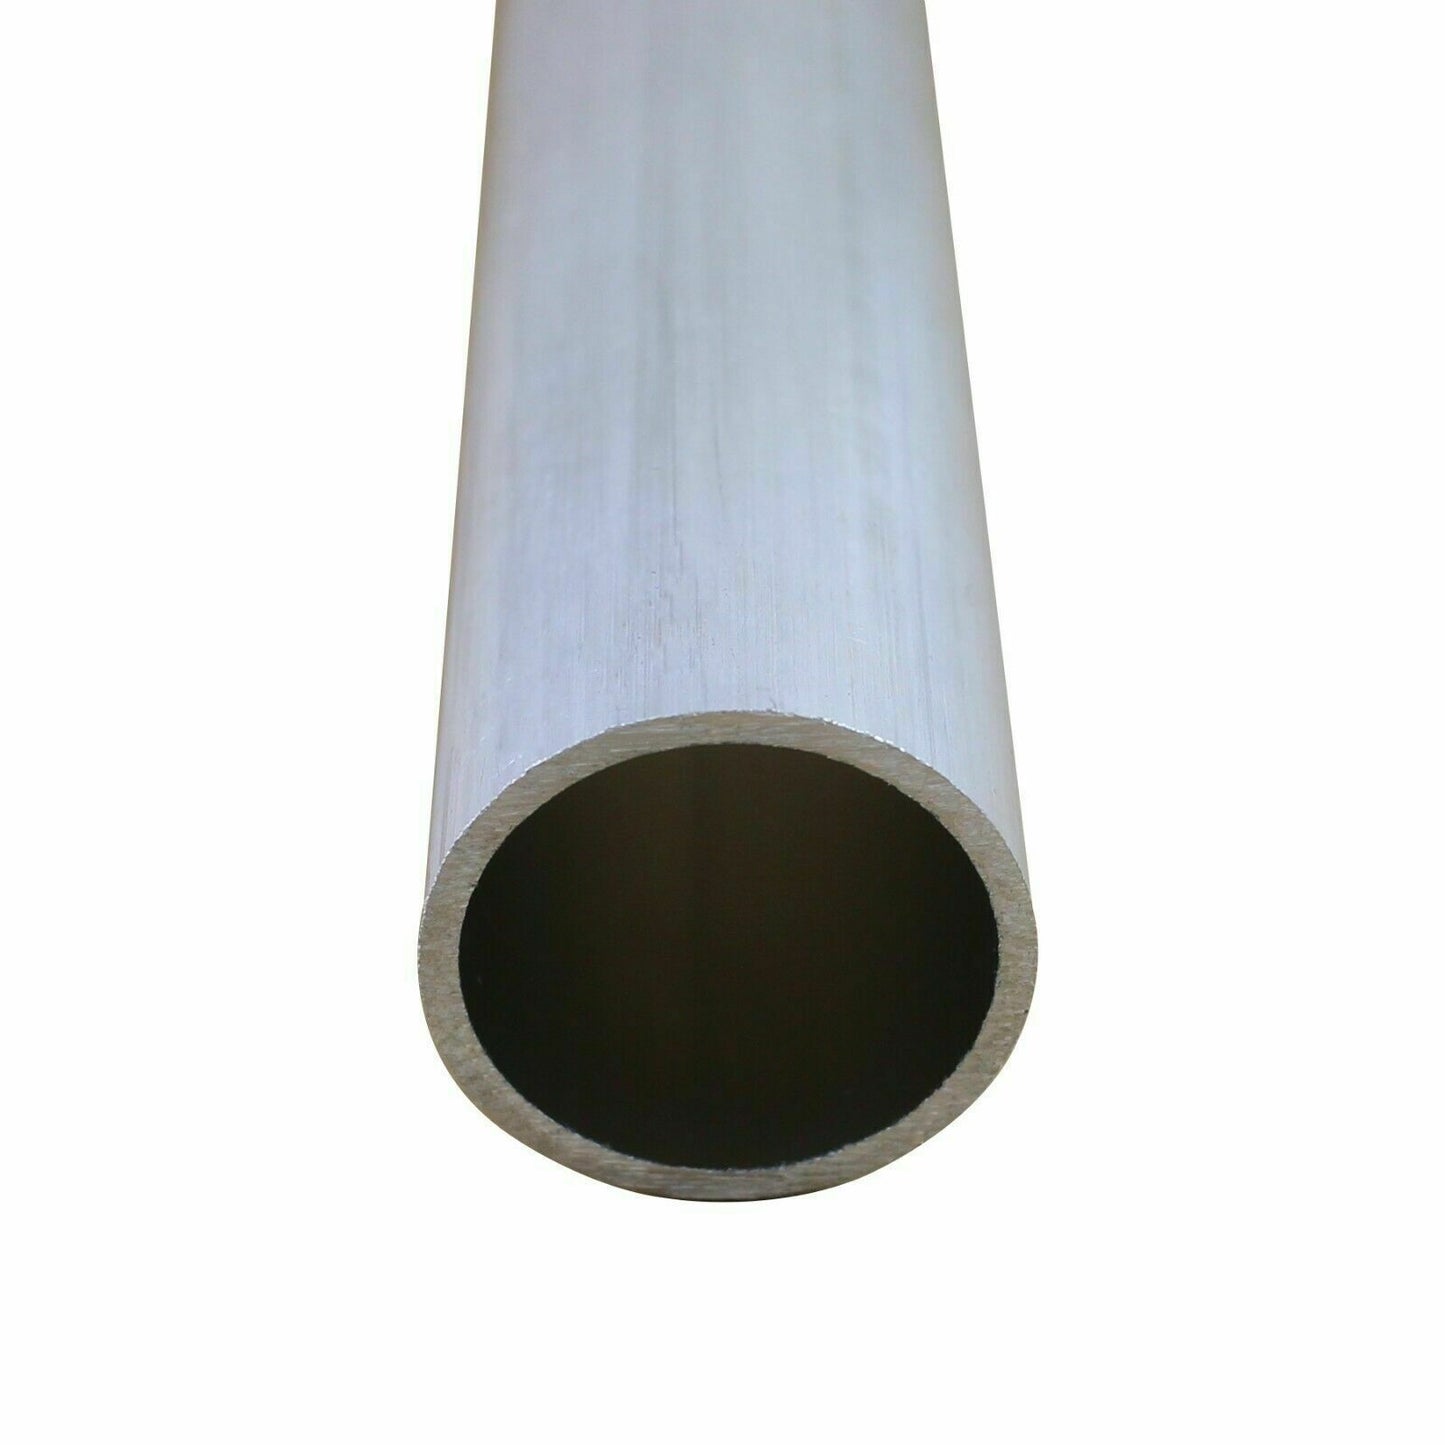 OD 38 mm ID 32 mm 1 Pcs Aluminum Round Tube Pipe